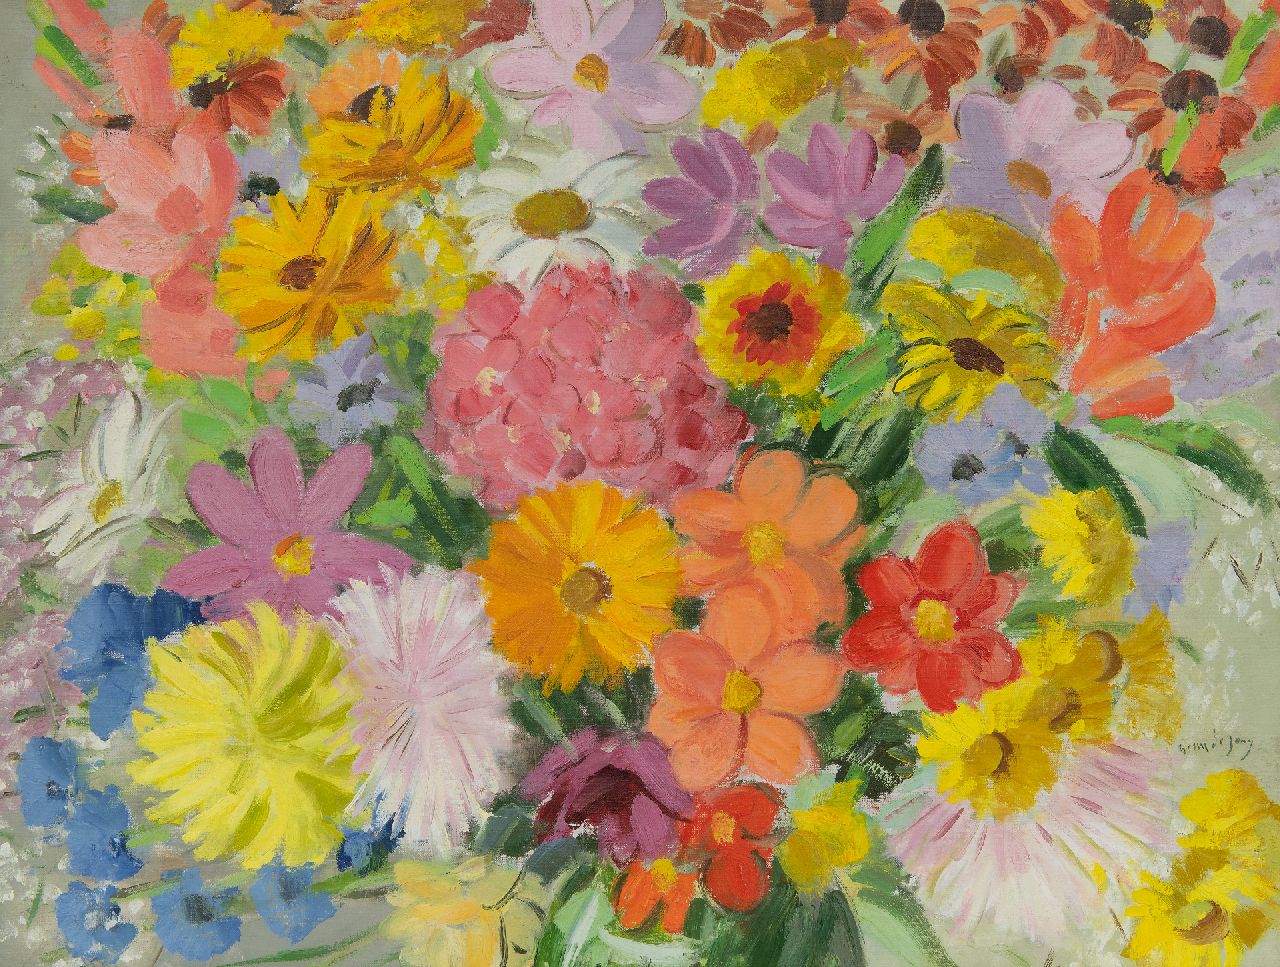 Jong G. de | Gerben 'Germ' de Jong | Gemälde zum Verkauf angeboten | Sommer Blumen, Öl auf Leinwand 47,3 x 62,4 cm, Unterzeichnet r.u.